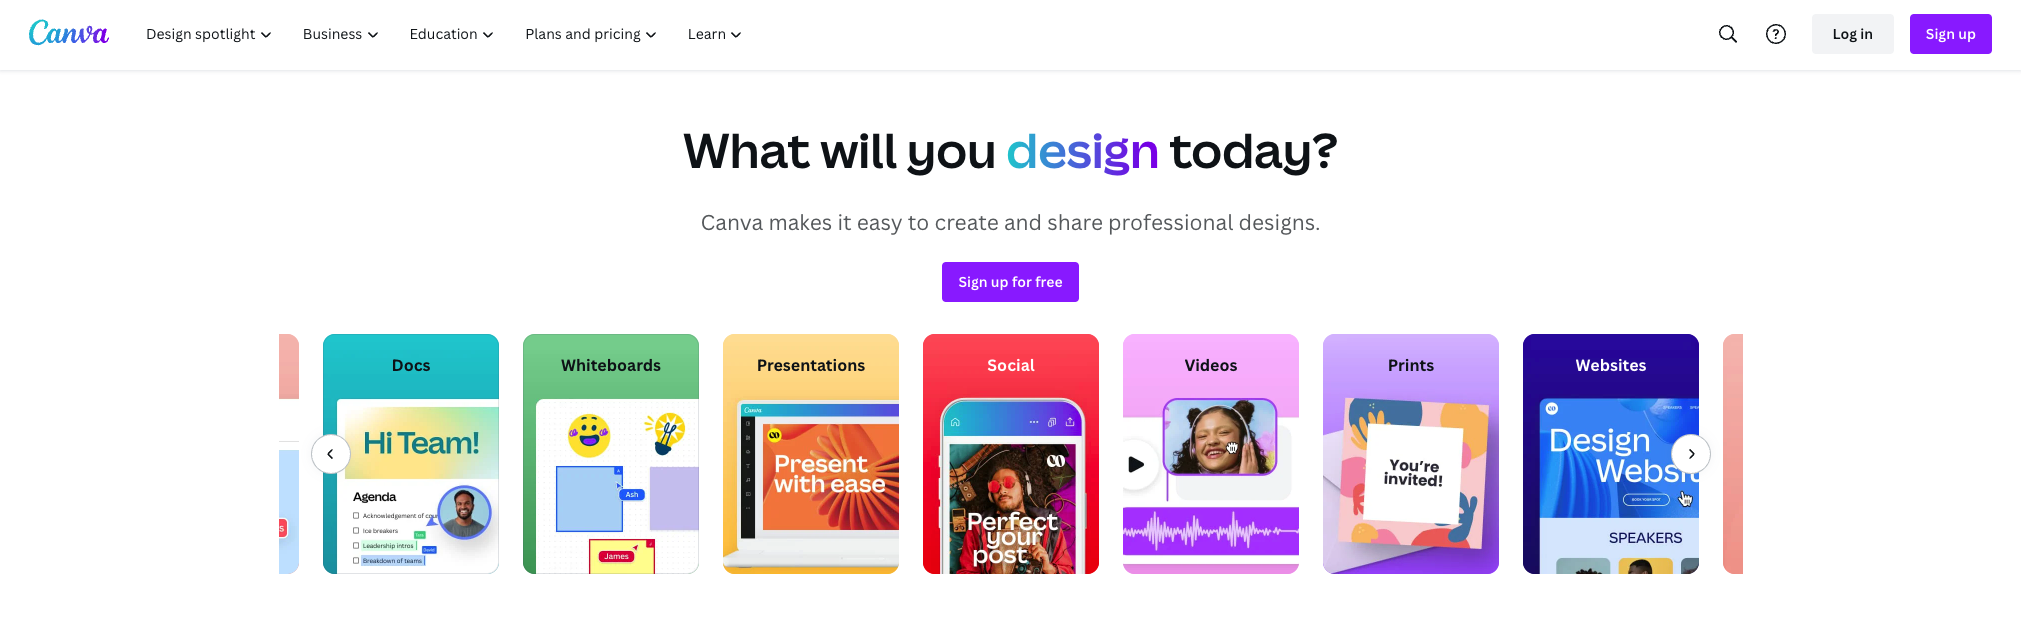 canva web design tool best